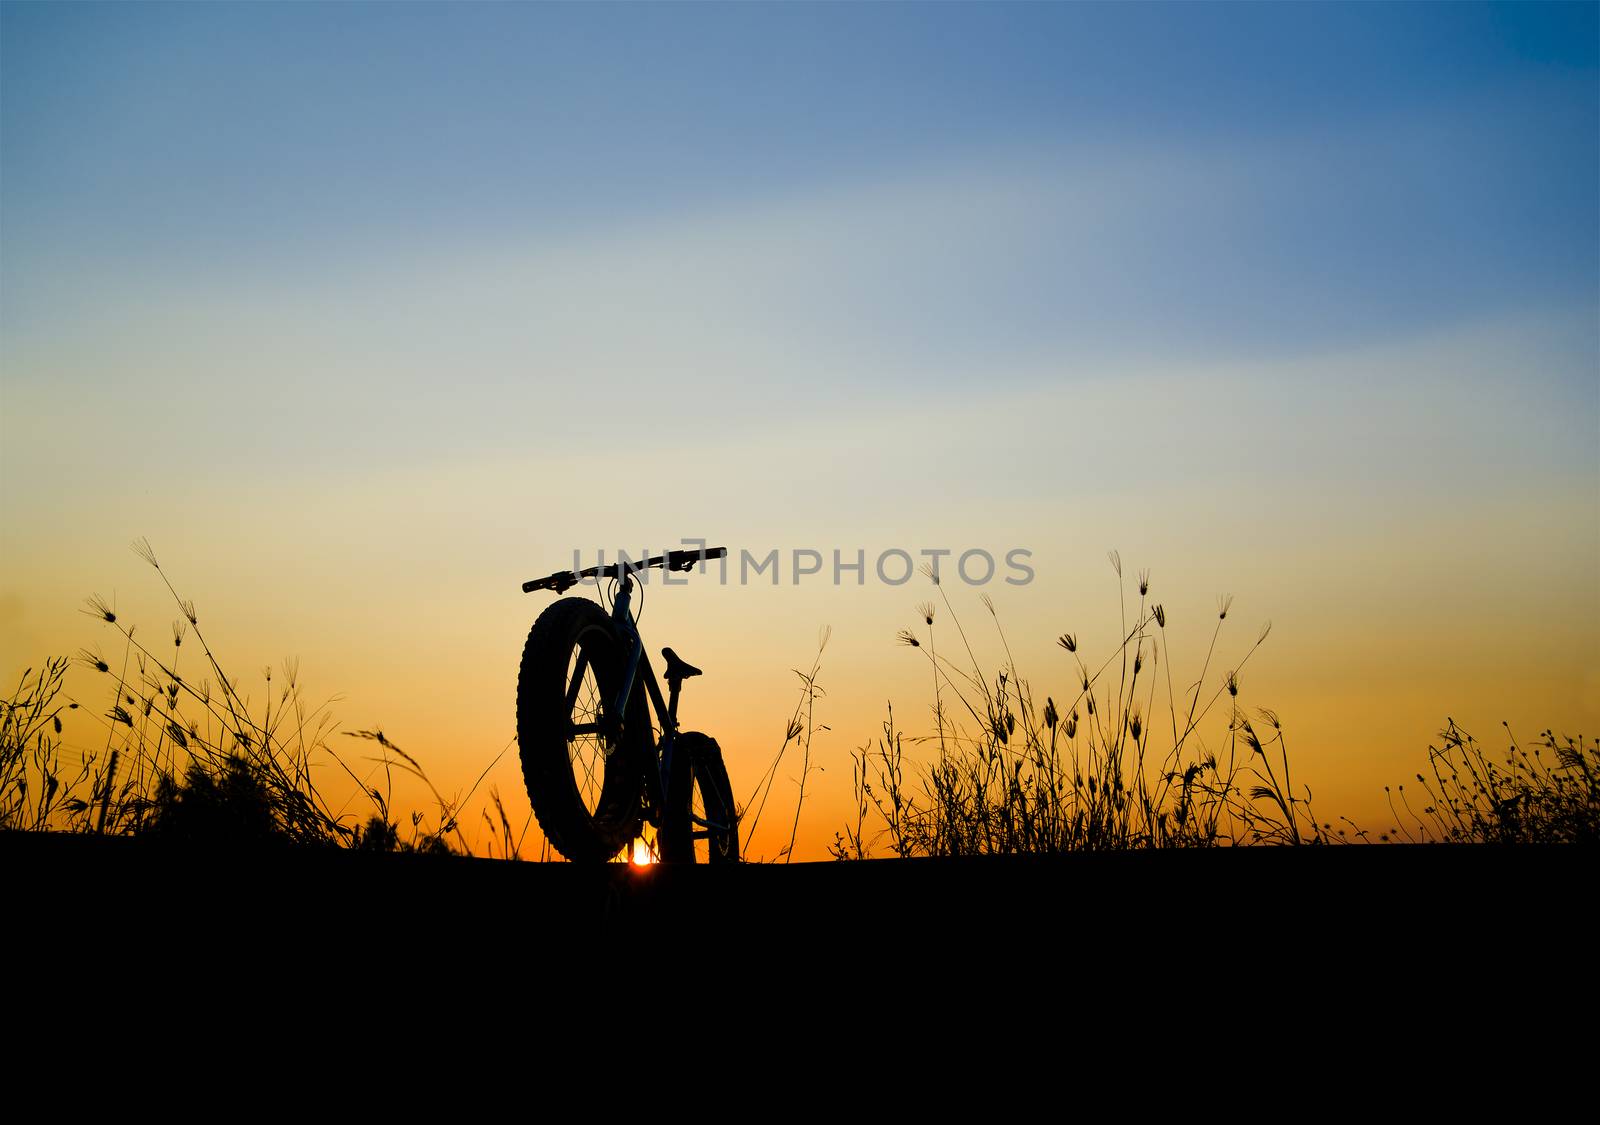 beautiful sunset sky and mountain bike silhouette , silhouette fat bike by anatskwong